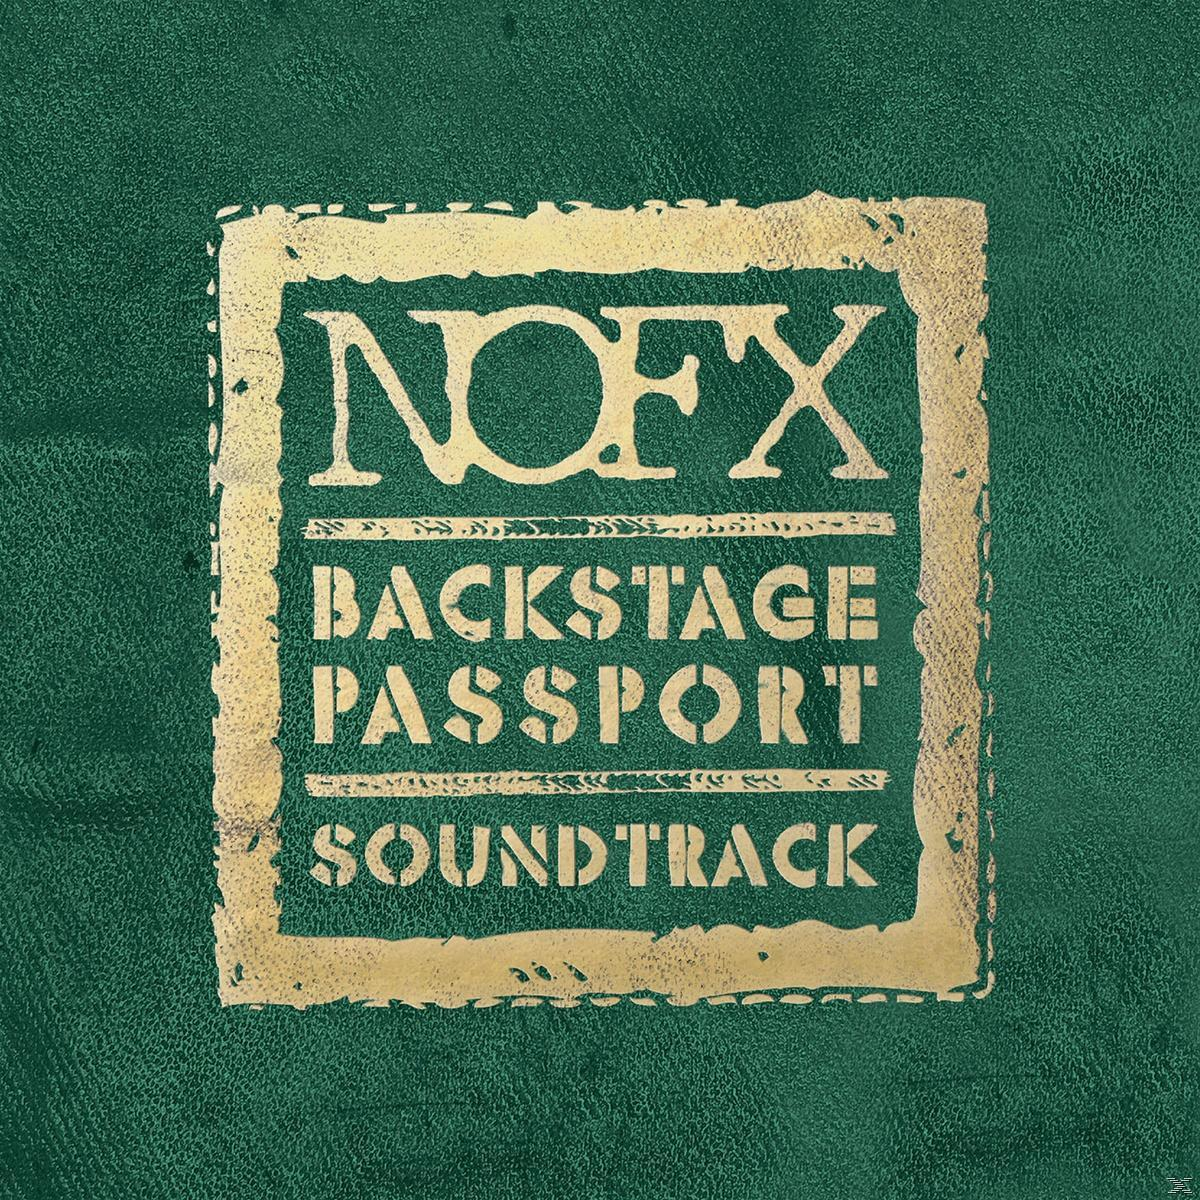 - + Download) Passport - Backstage - (LP Soundtrack Nofx